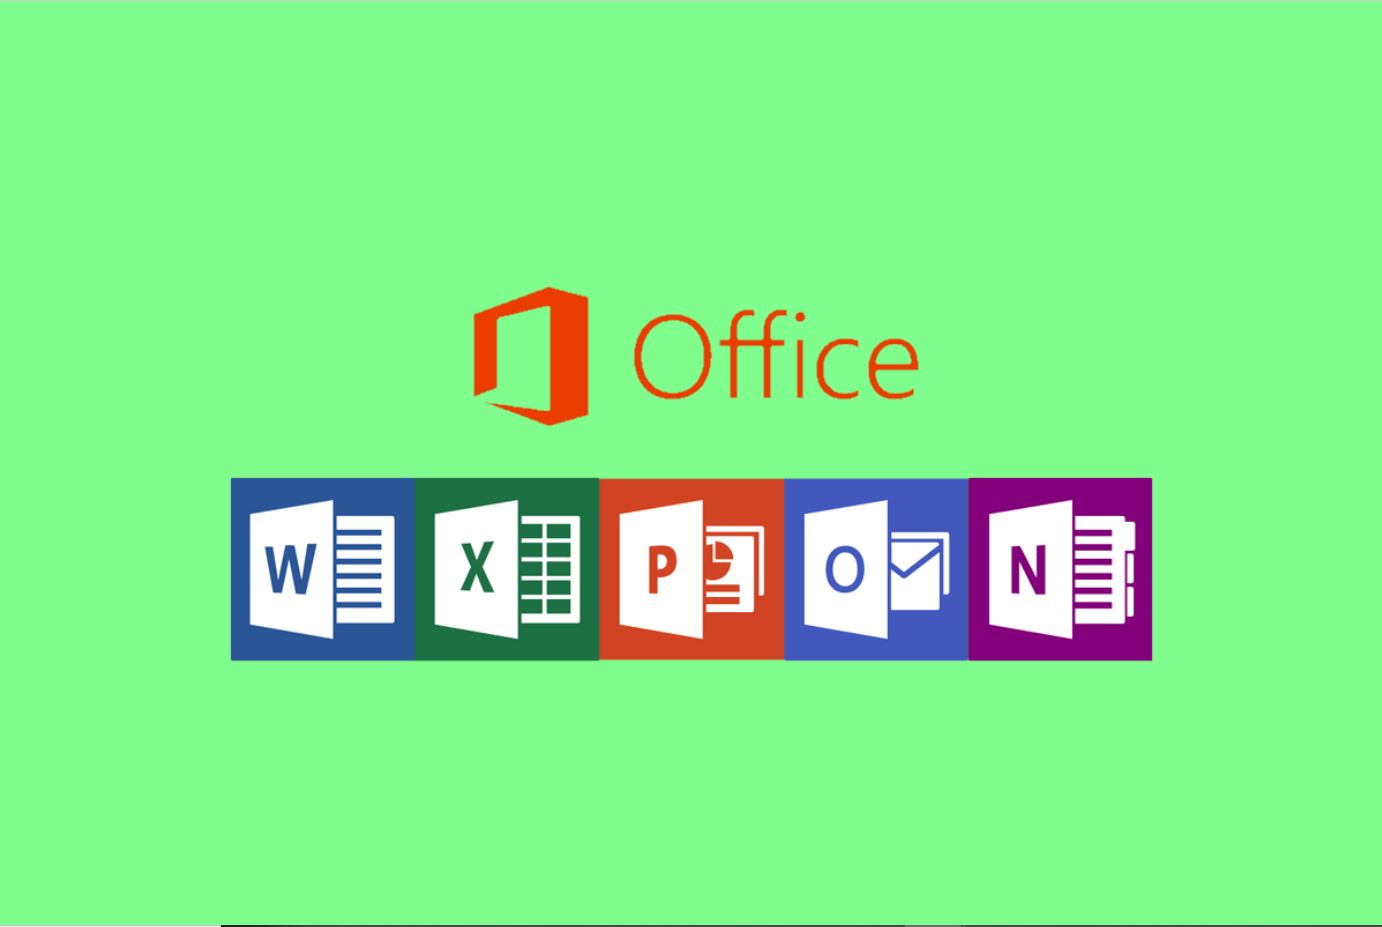 Микрософт офис 2021. Microsoft Office Office 2021. Майкрософт офис последняя версия 2021. МС офис 2021. Логотип MS Office 2021.